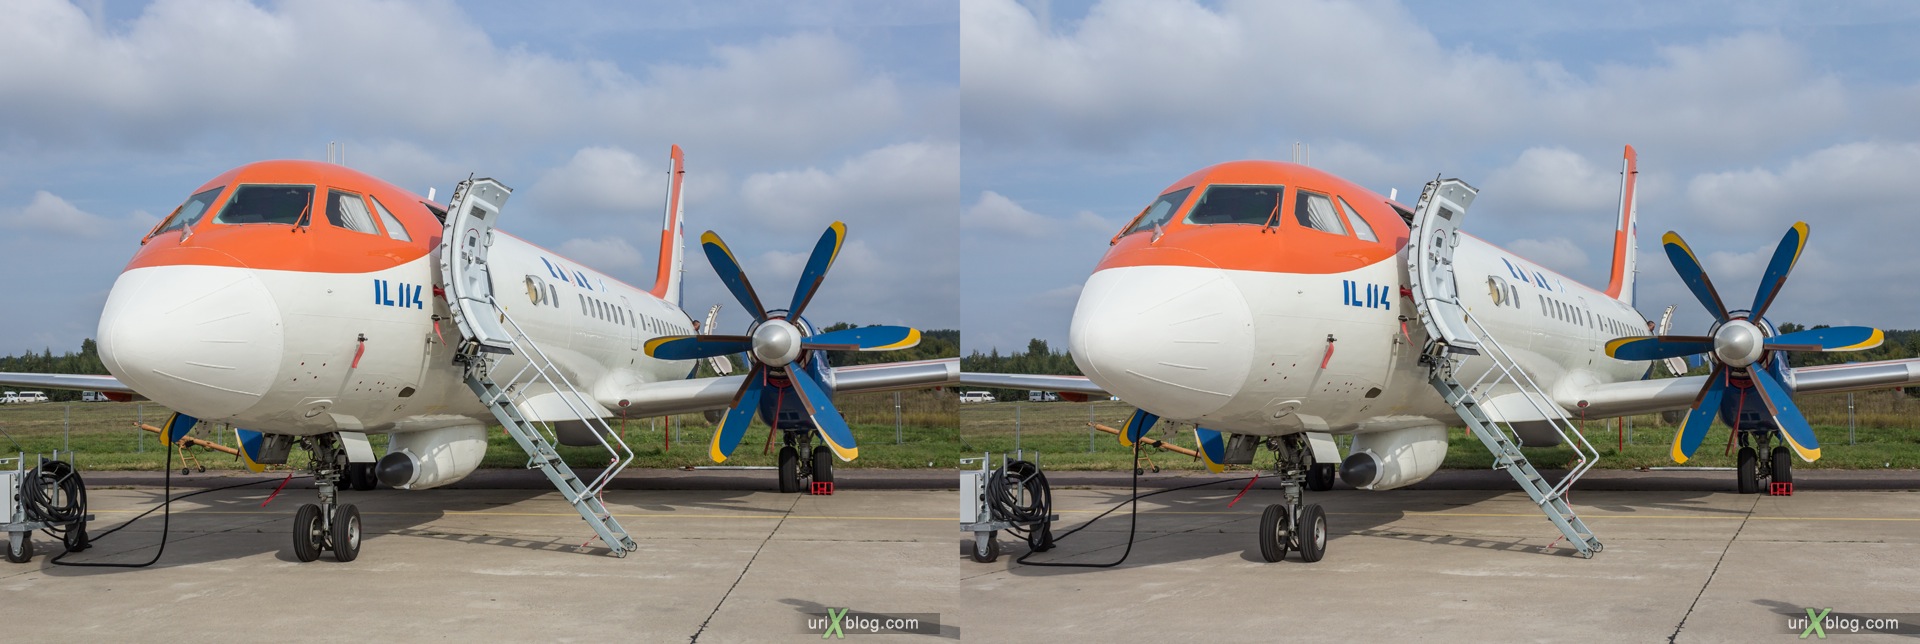 2013, Il-114, MAKS, International Aviation and Space Salon, Russia, Ramenskoye airfield, airplane, 3D, stereo pair, cross-eyed, crossview, cross view stereo pair, stereoscopic